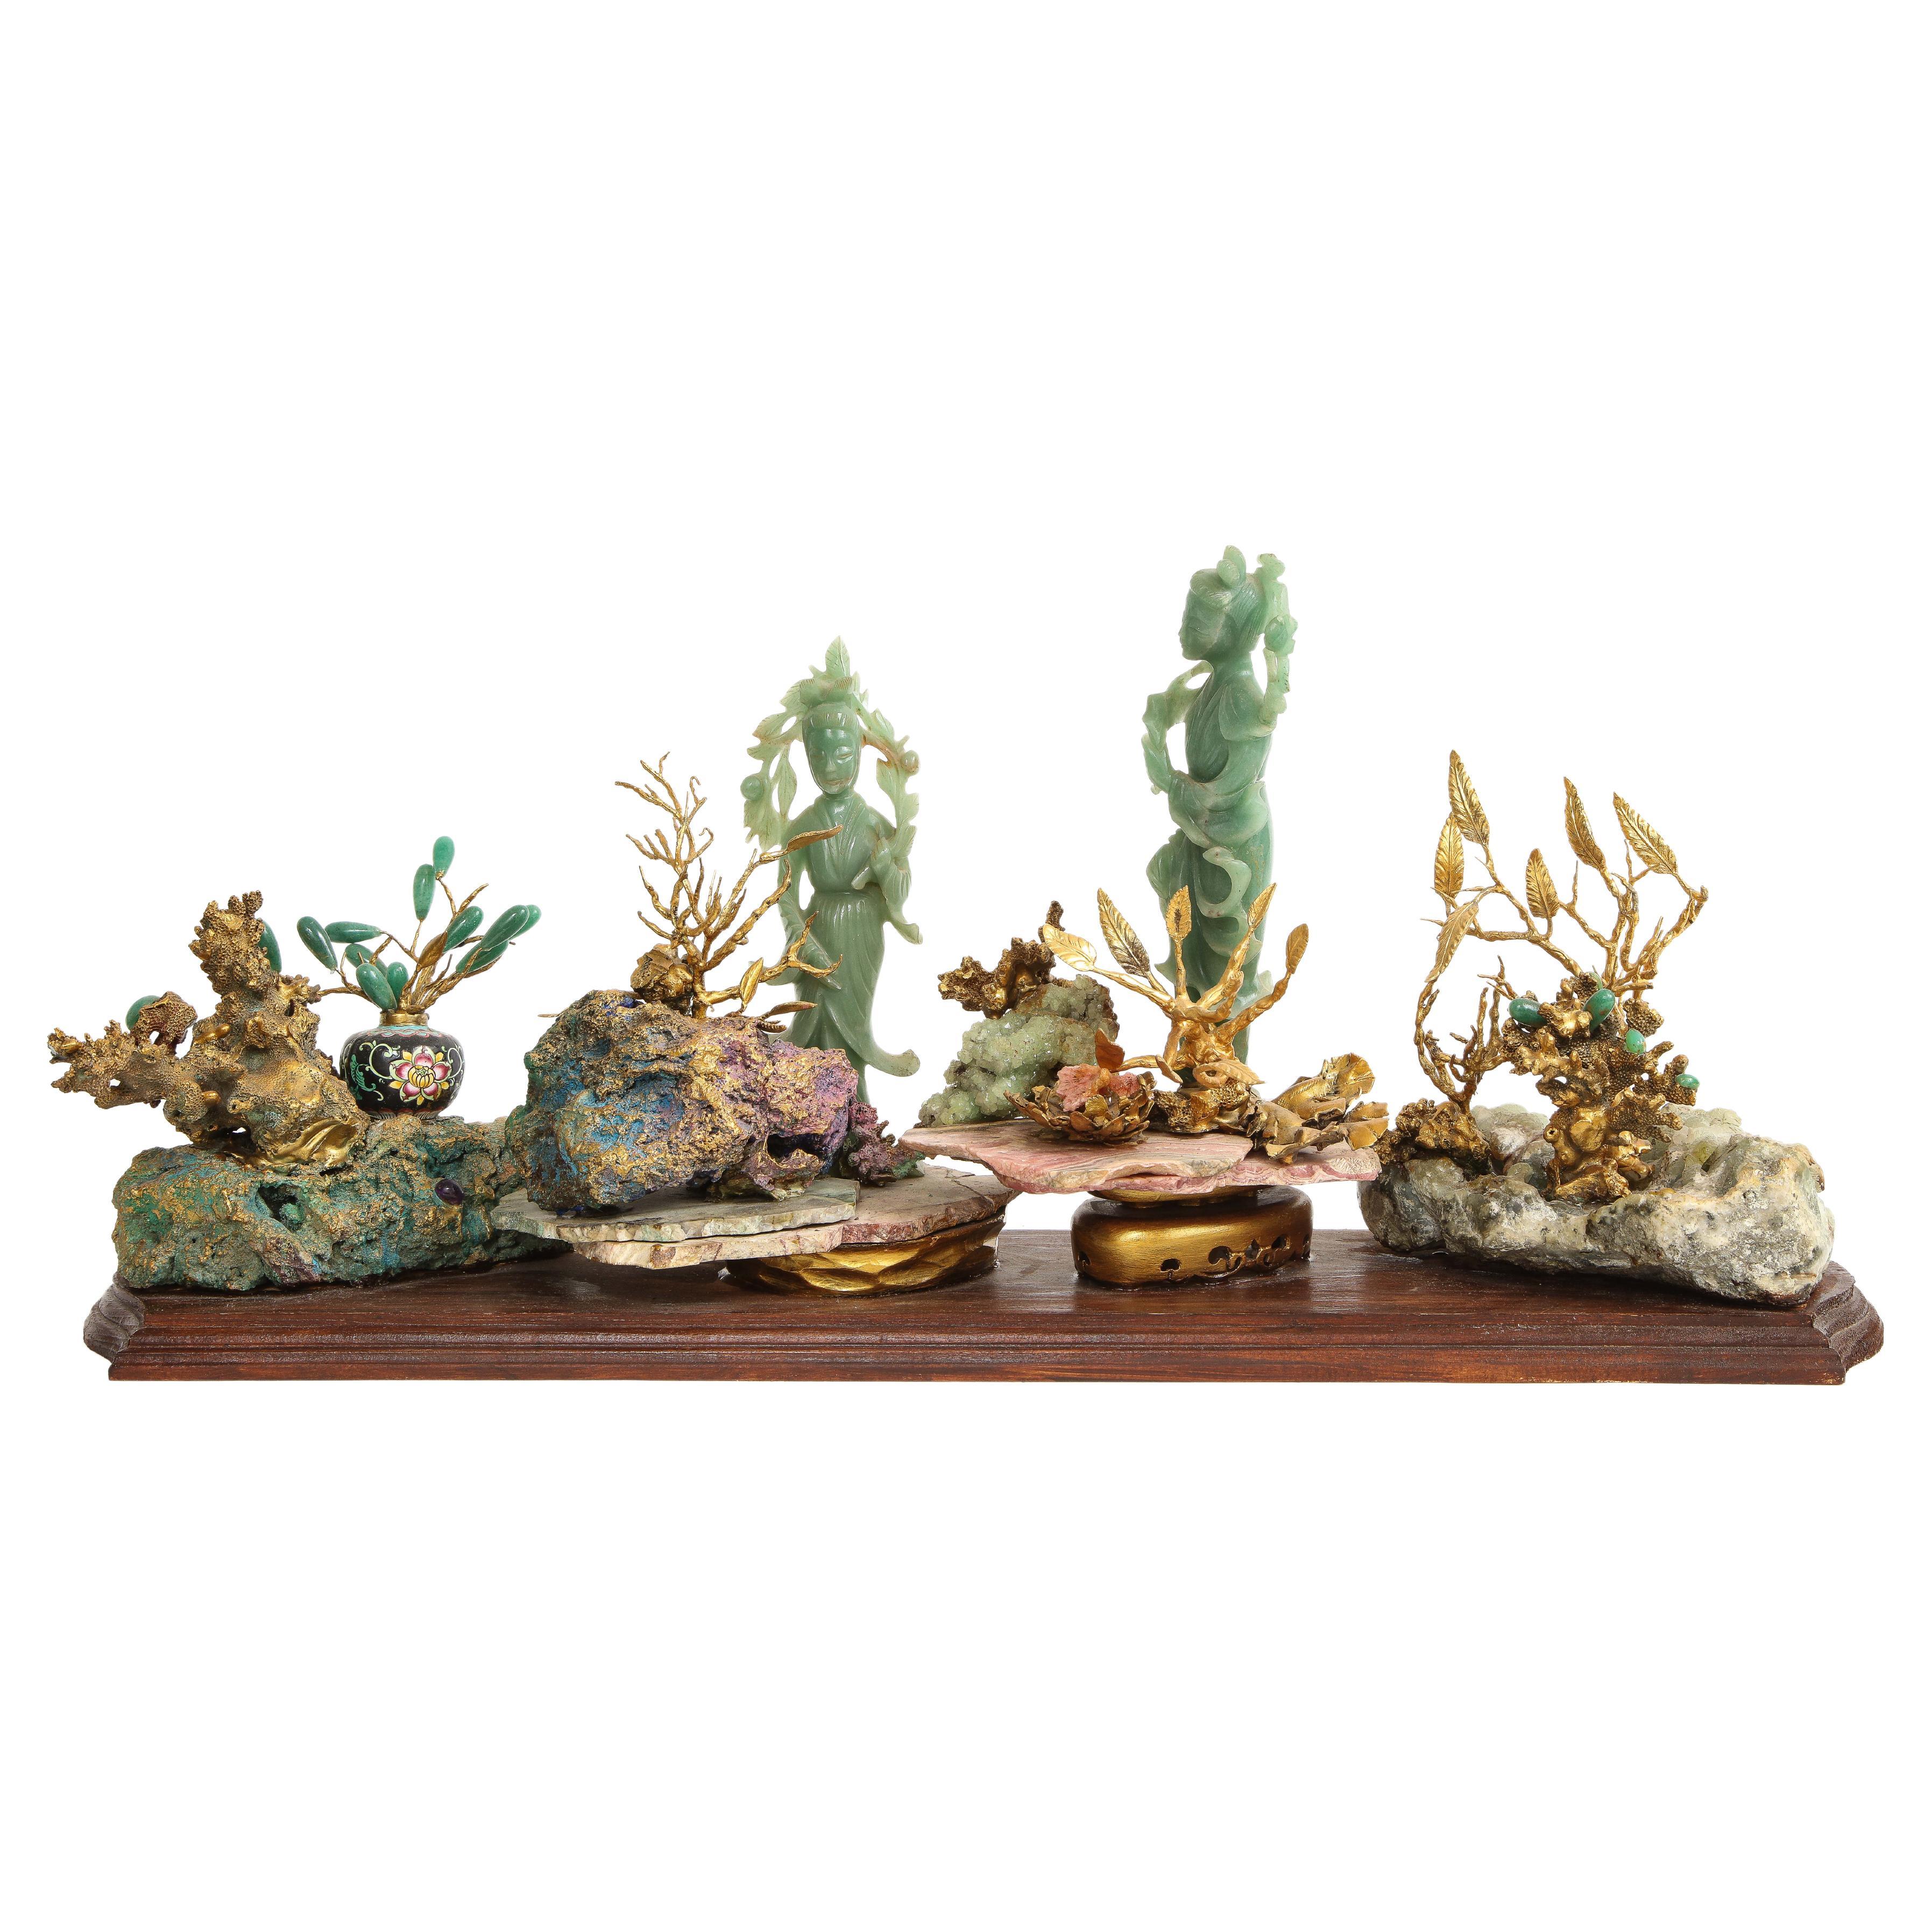 20th Century Chinese Jade, Cloisonné, & Gilt Metal Desk Accessory/Sculpture For Sale